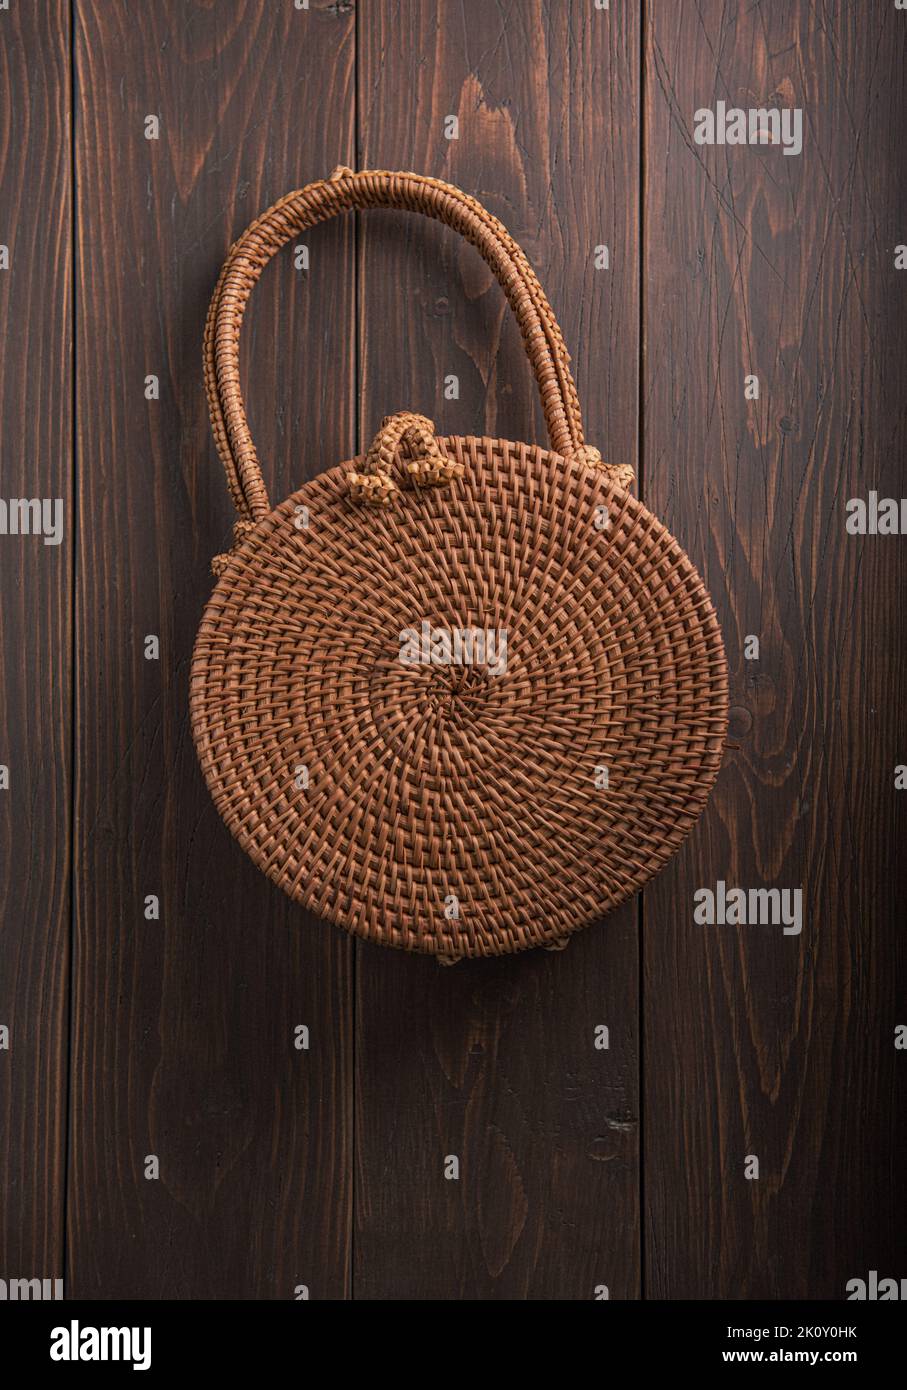 Modern stylish round straw bag on the wooden background, close up Stock Photo